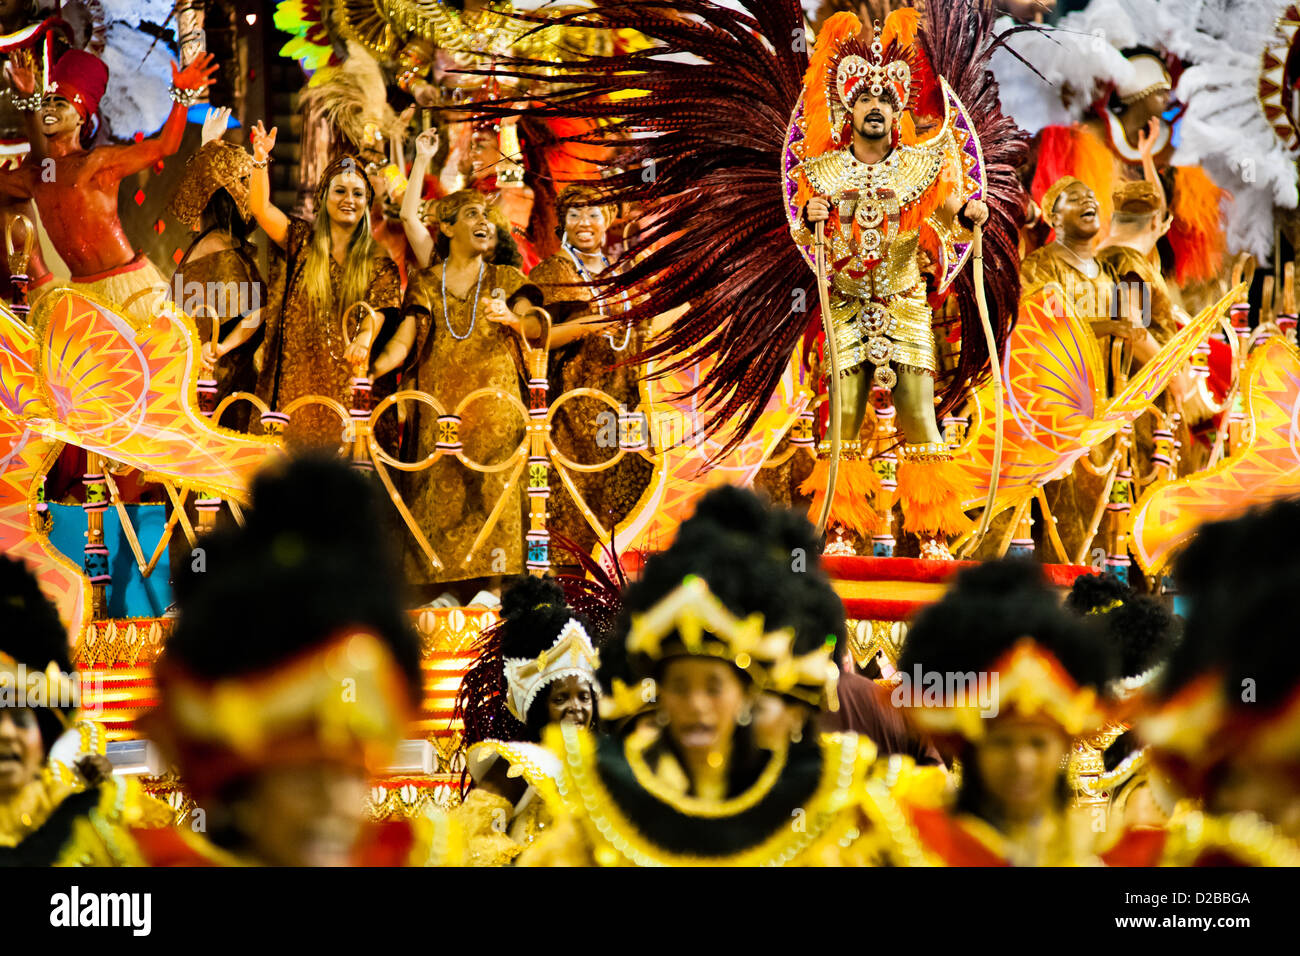 Dancers of Portela samba school perform during the Carnival parade at the Sambadrome in Rio de Janeiro, Brazil. Stock Photo